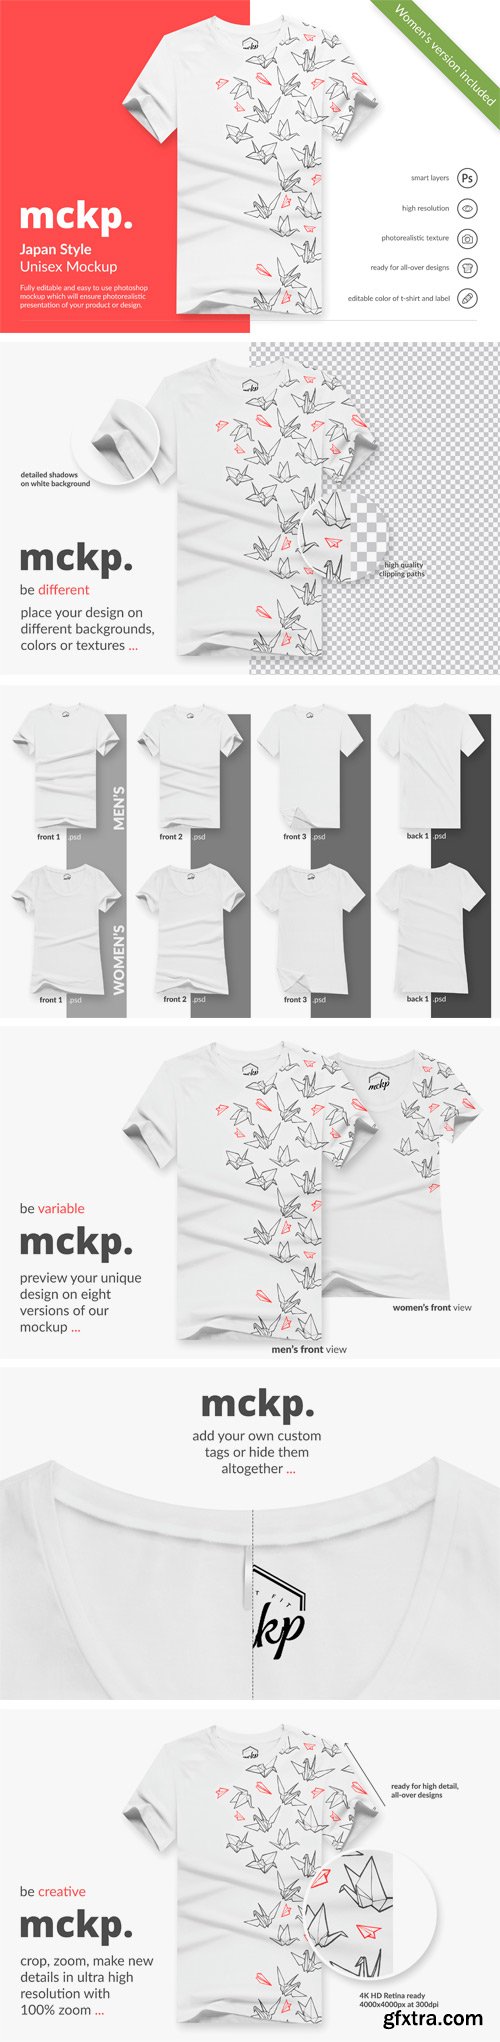 CM 1428977 - Japan Style by mckp - Tshirt Mockups